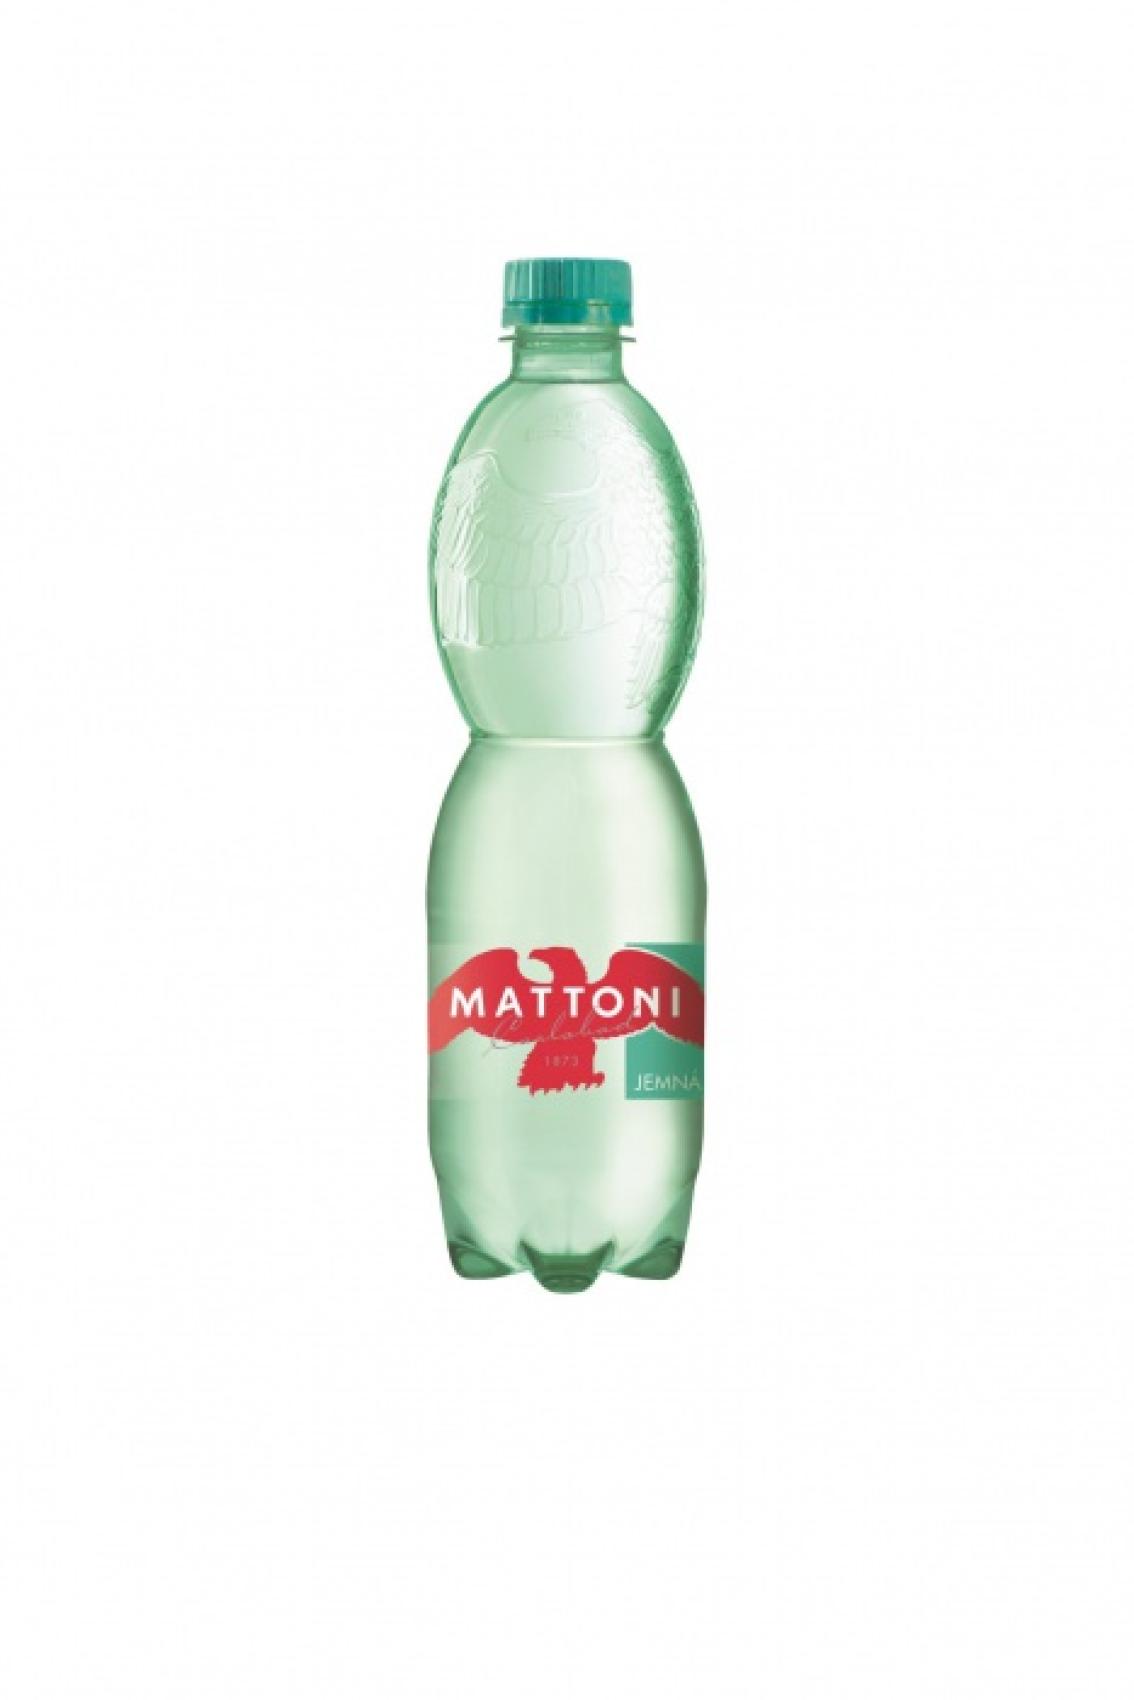 Minerln voda MATTONI 0,5l jemn perliv - Kliknutm na obrzek zavete